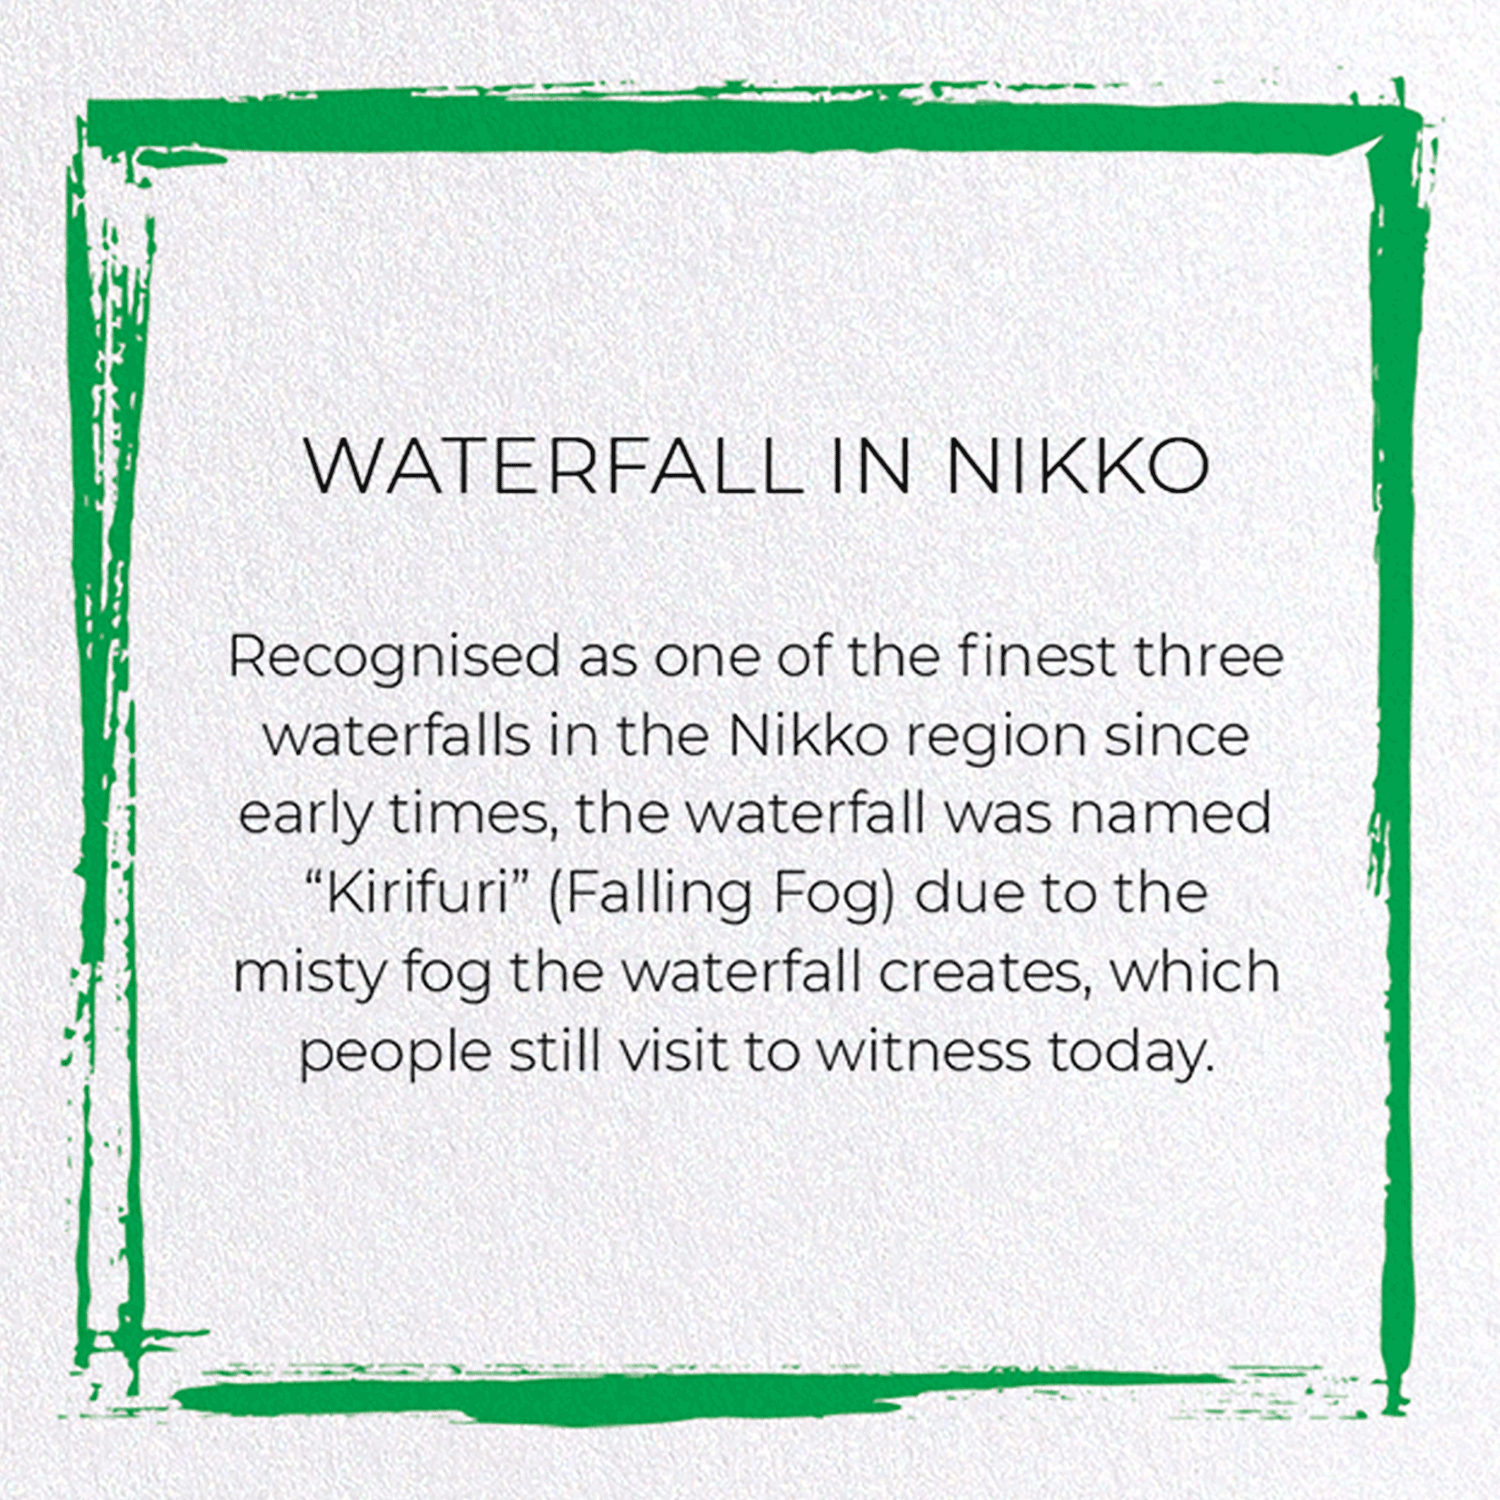 WATERFALL IN NIKKO: Japanese Greeting Card